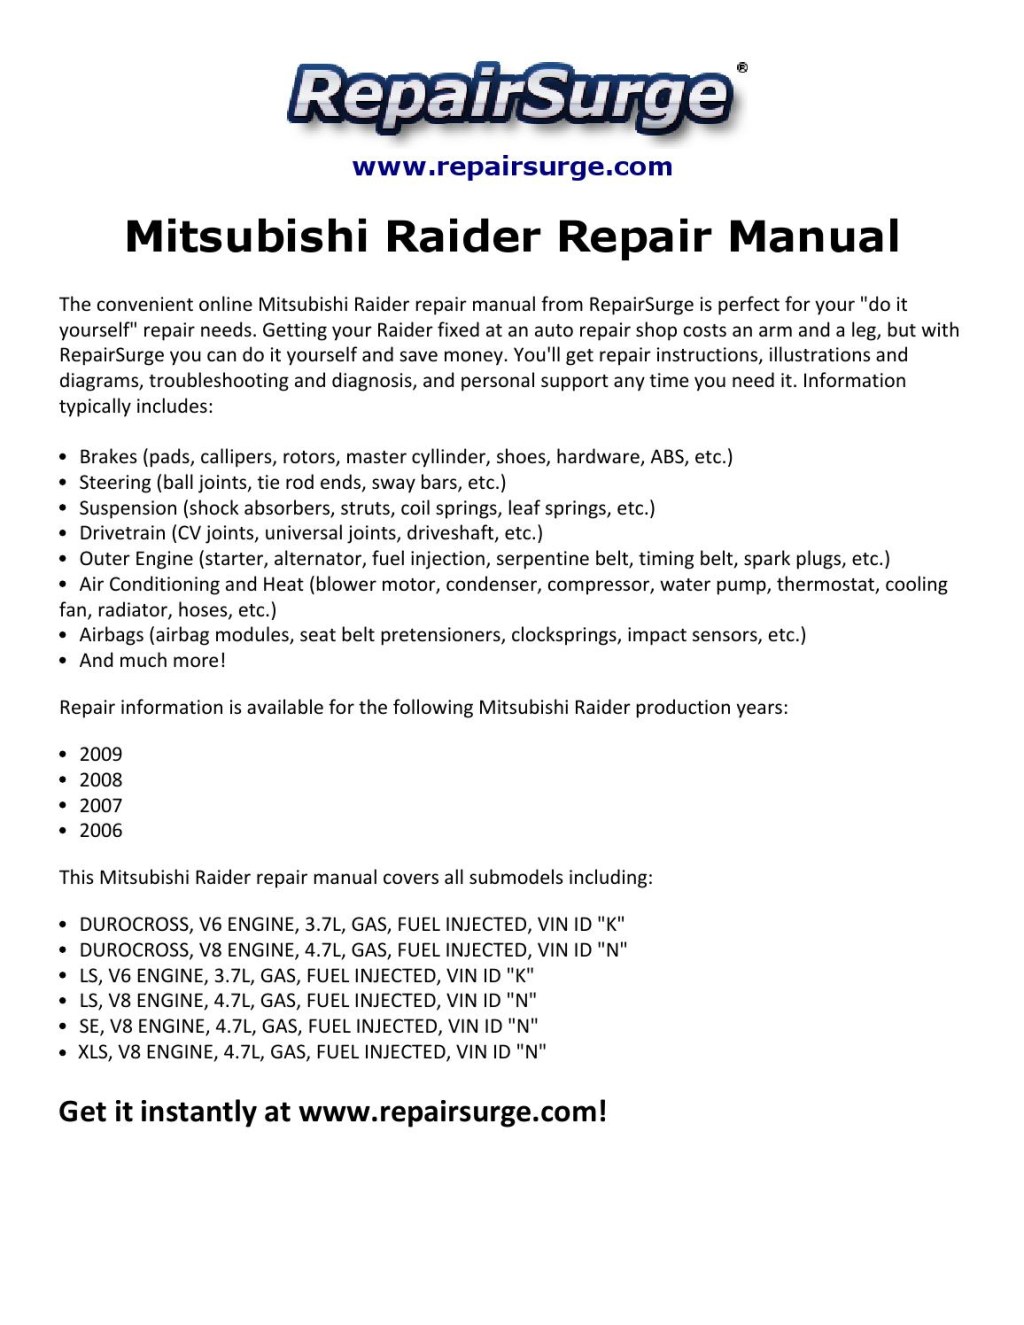 Picture of: Mitsubishi raider repair manual   by Chris Bechard – Issuu